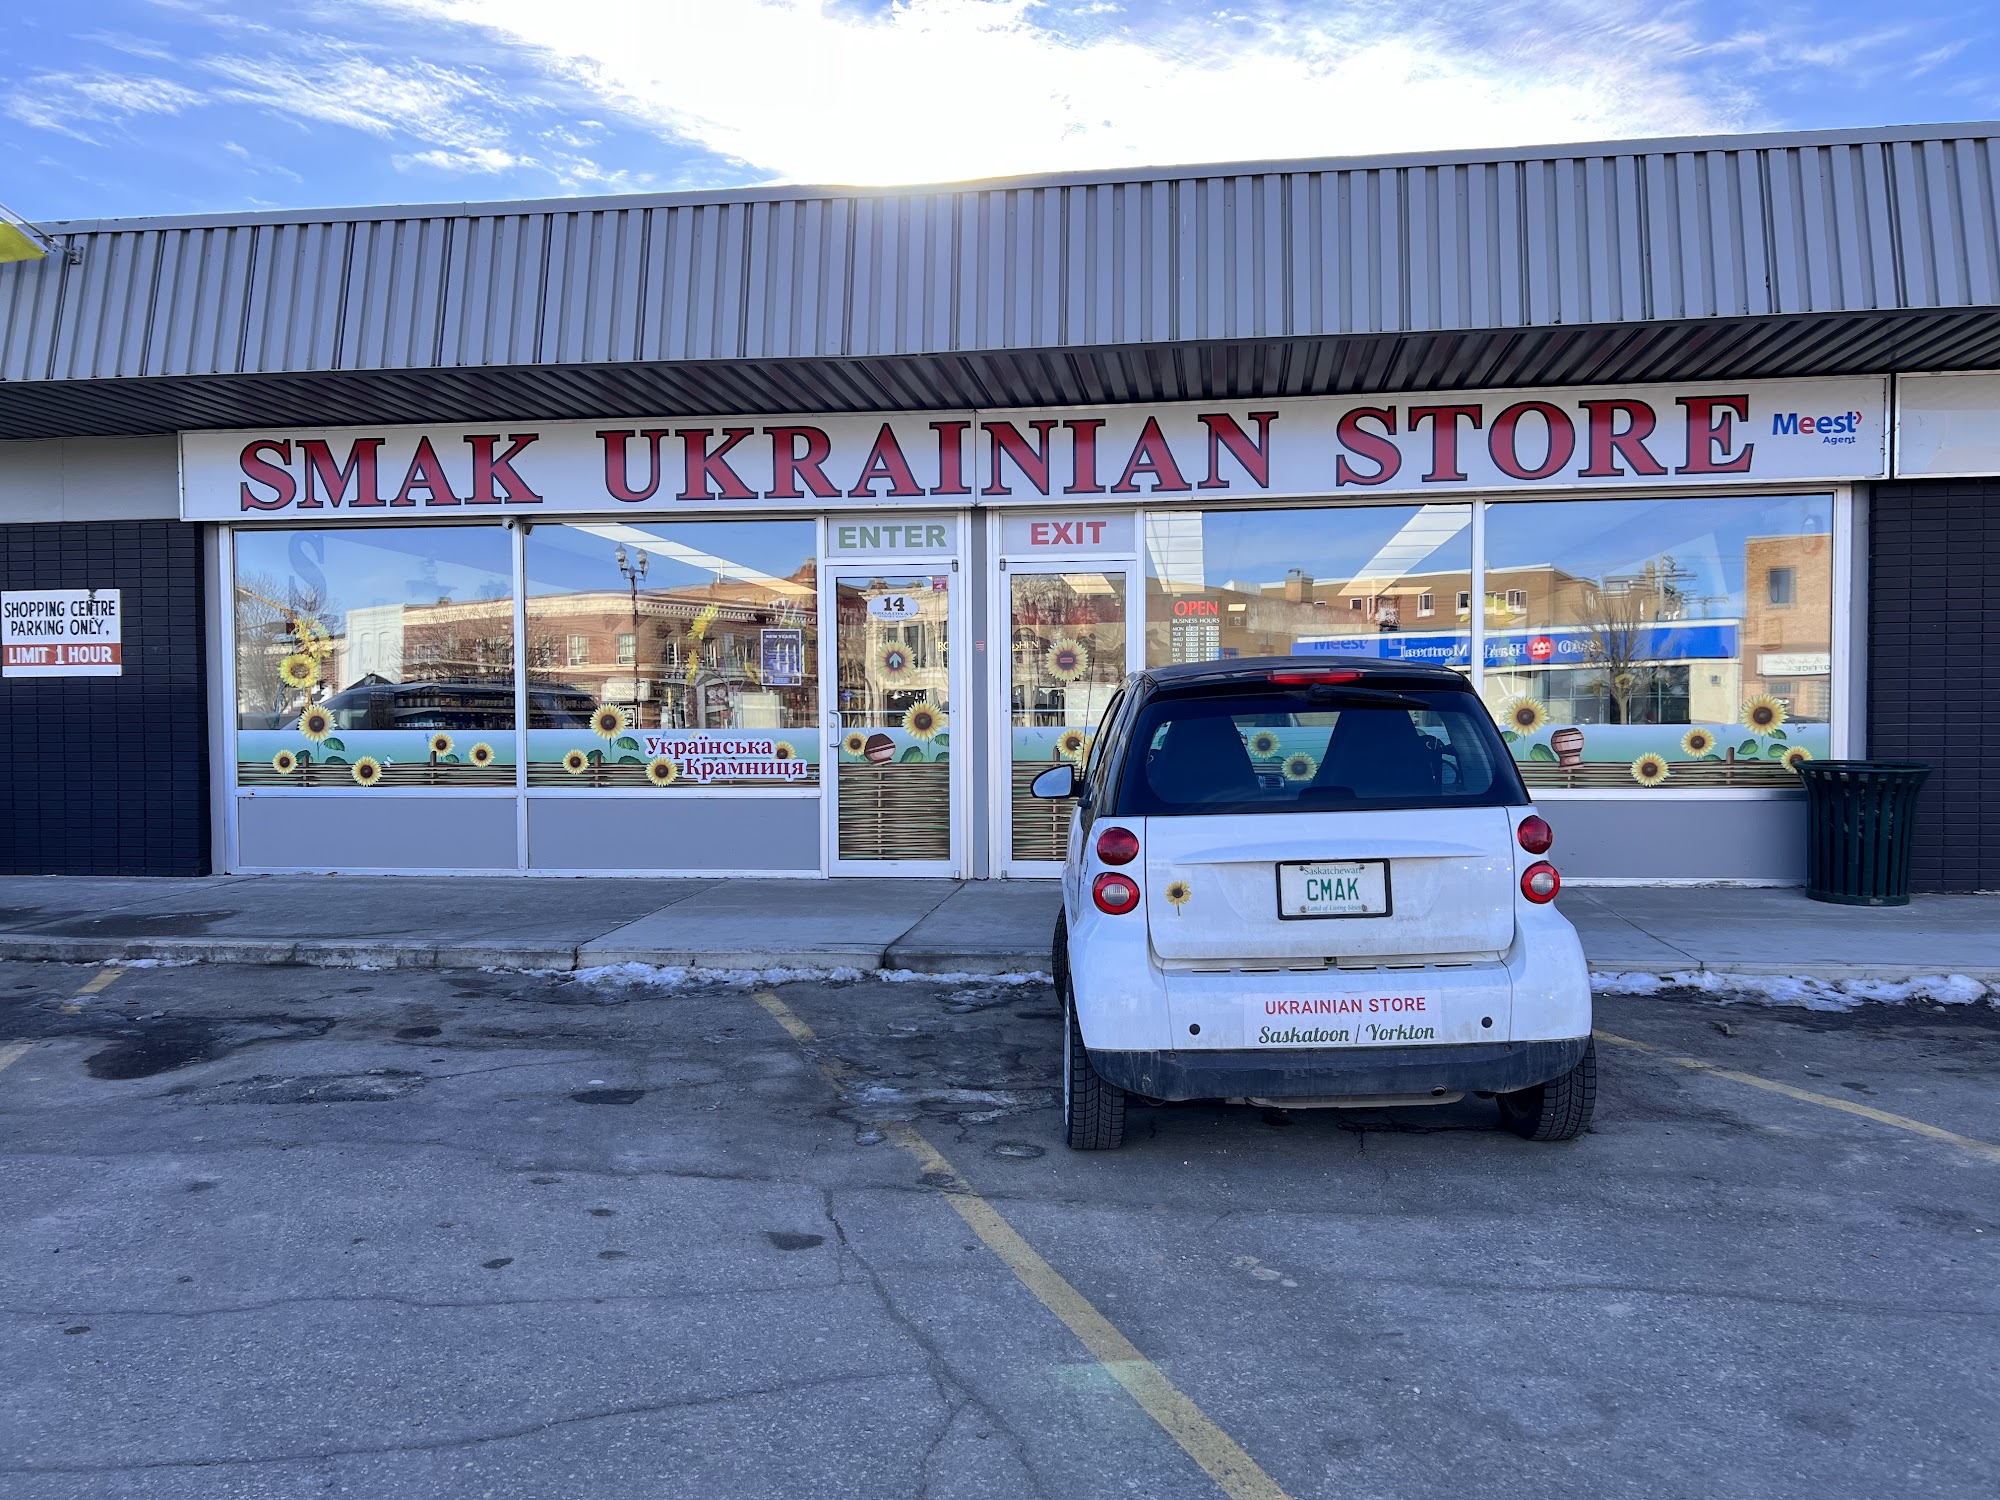 Smak Ukrainian Store